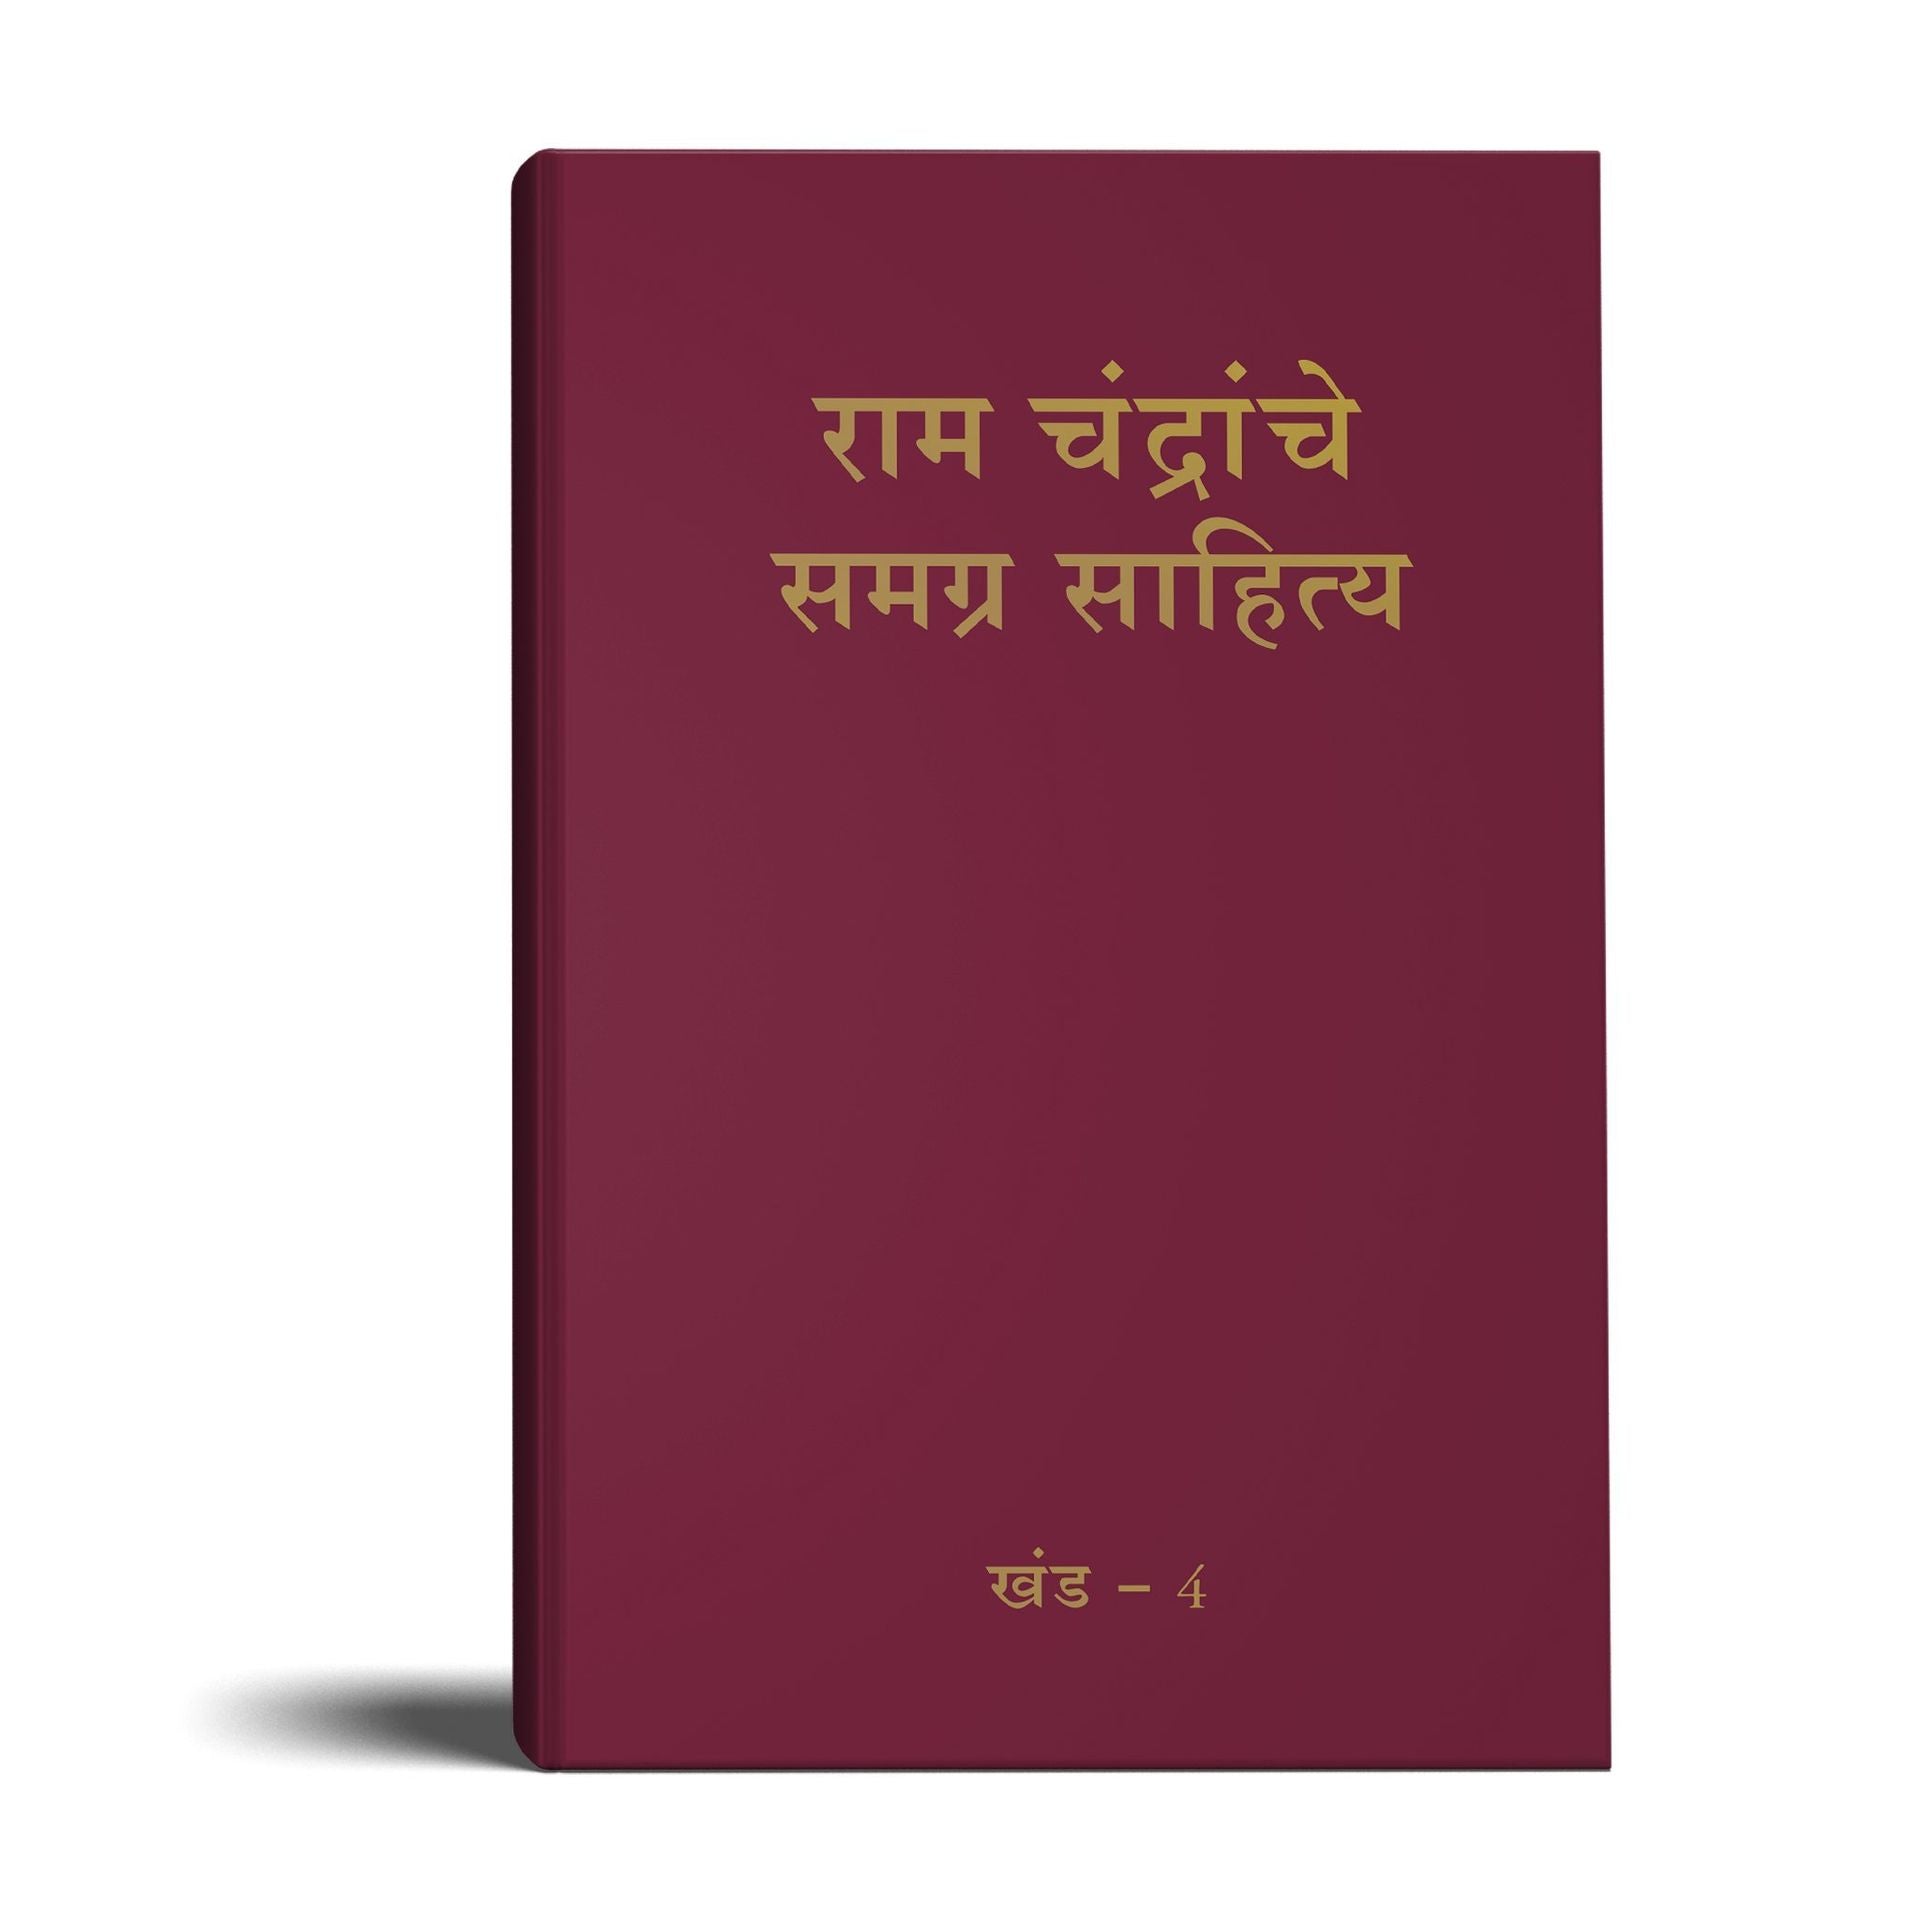 Complete Works of Ram Chandra (Babuji) - Volume 4 - hfnl!fe